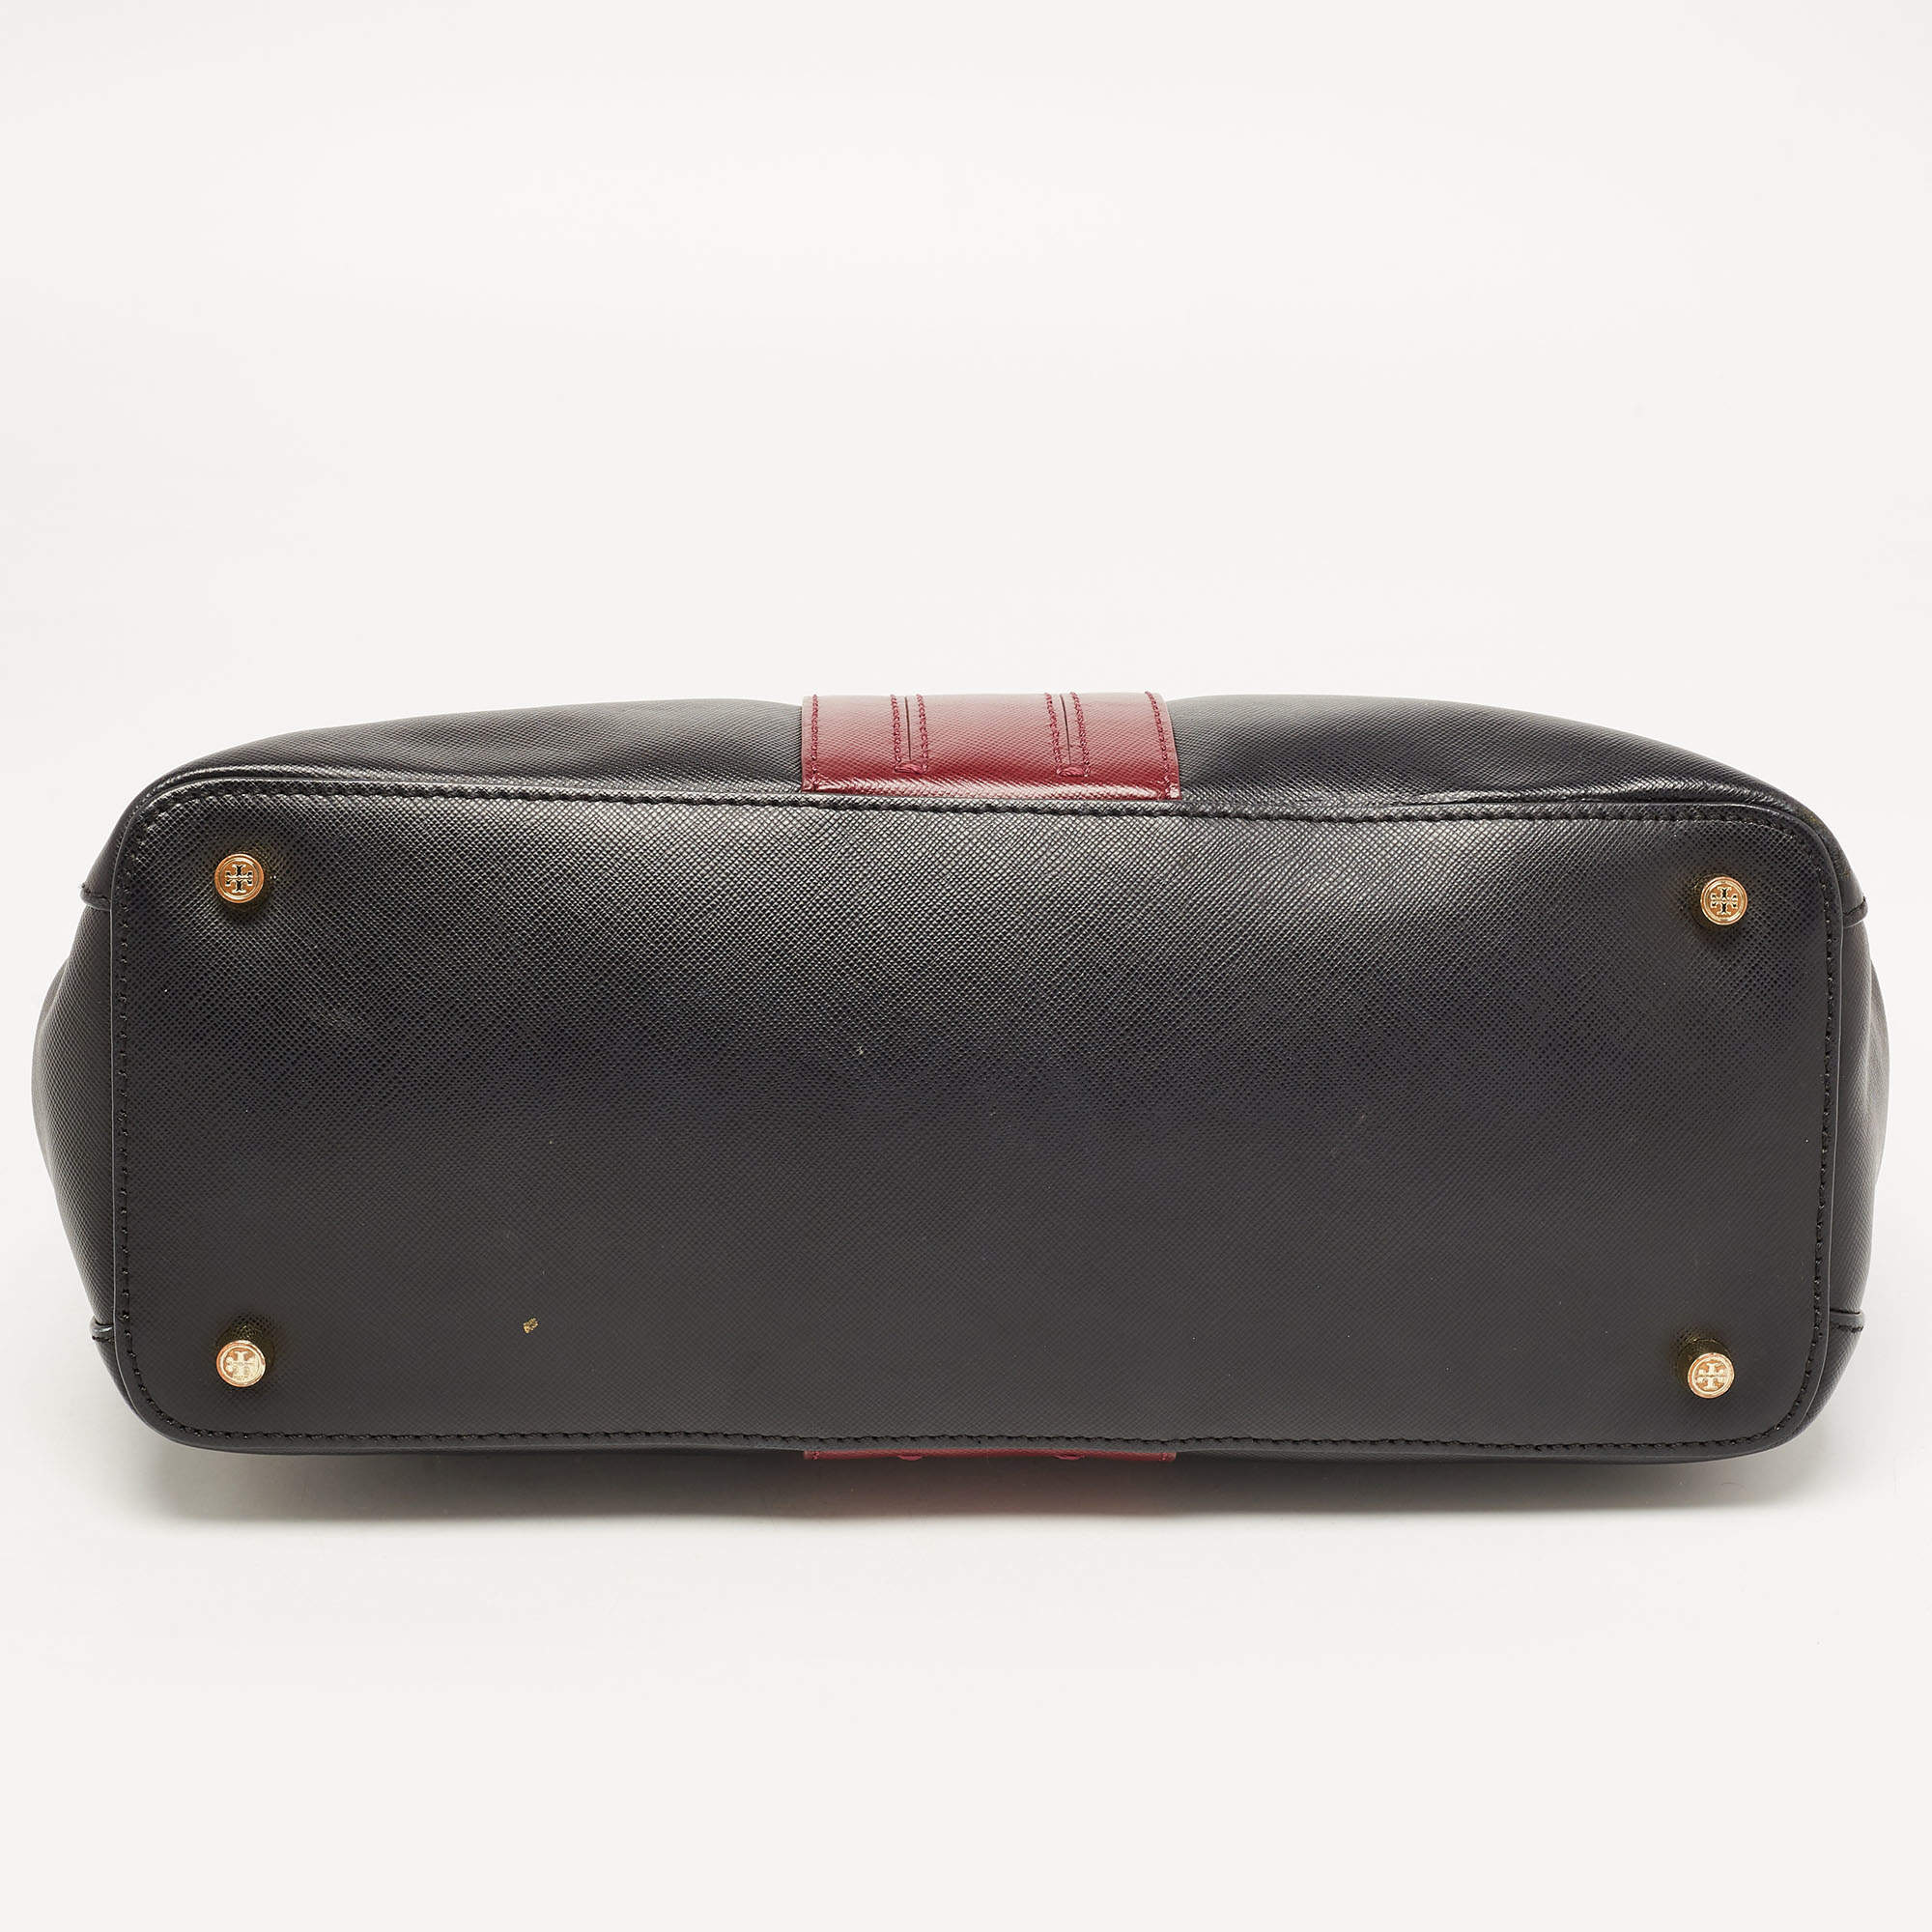 Tory Burch Saffiano Leather Tote - Black Totes, Handbags - WTO585383